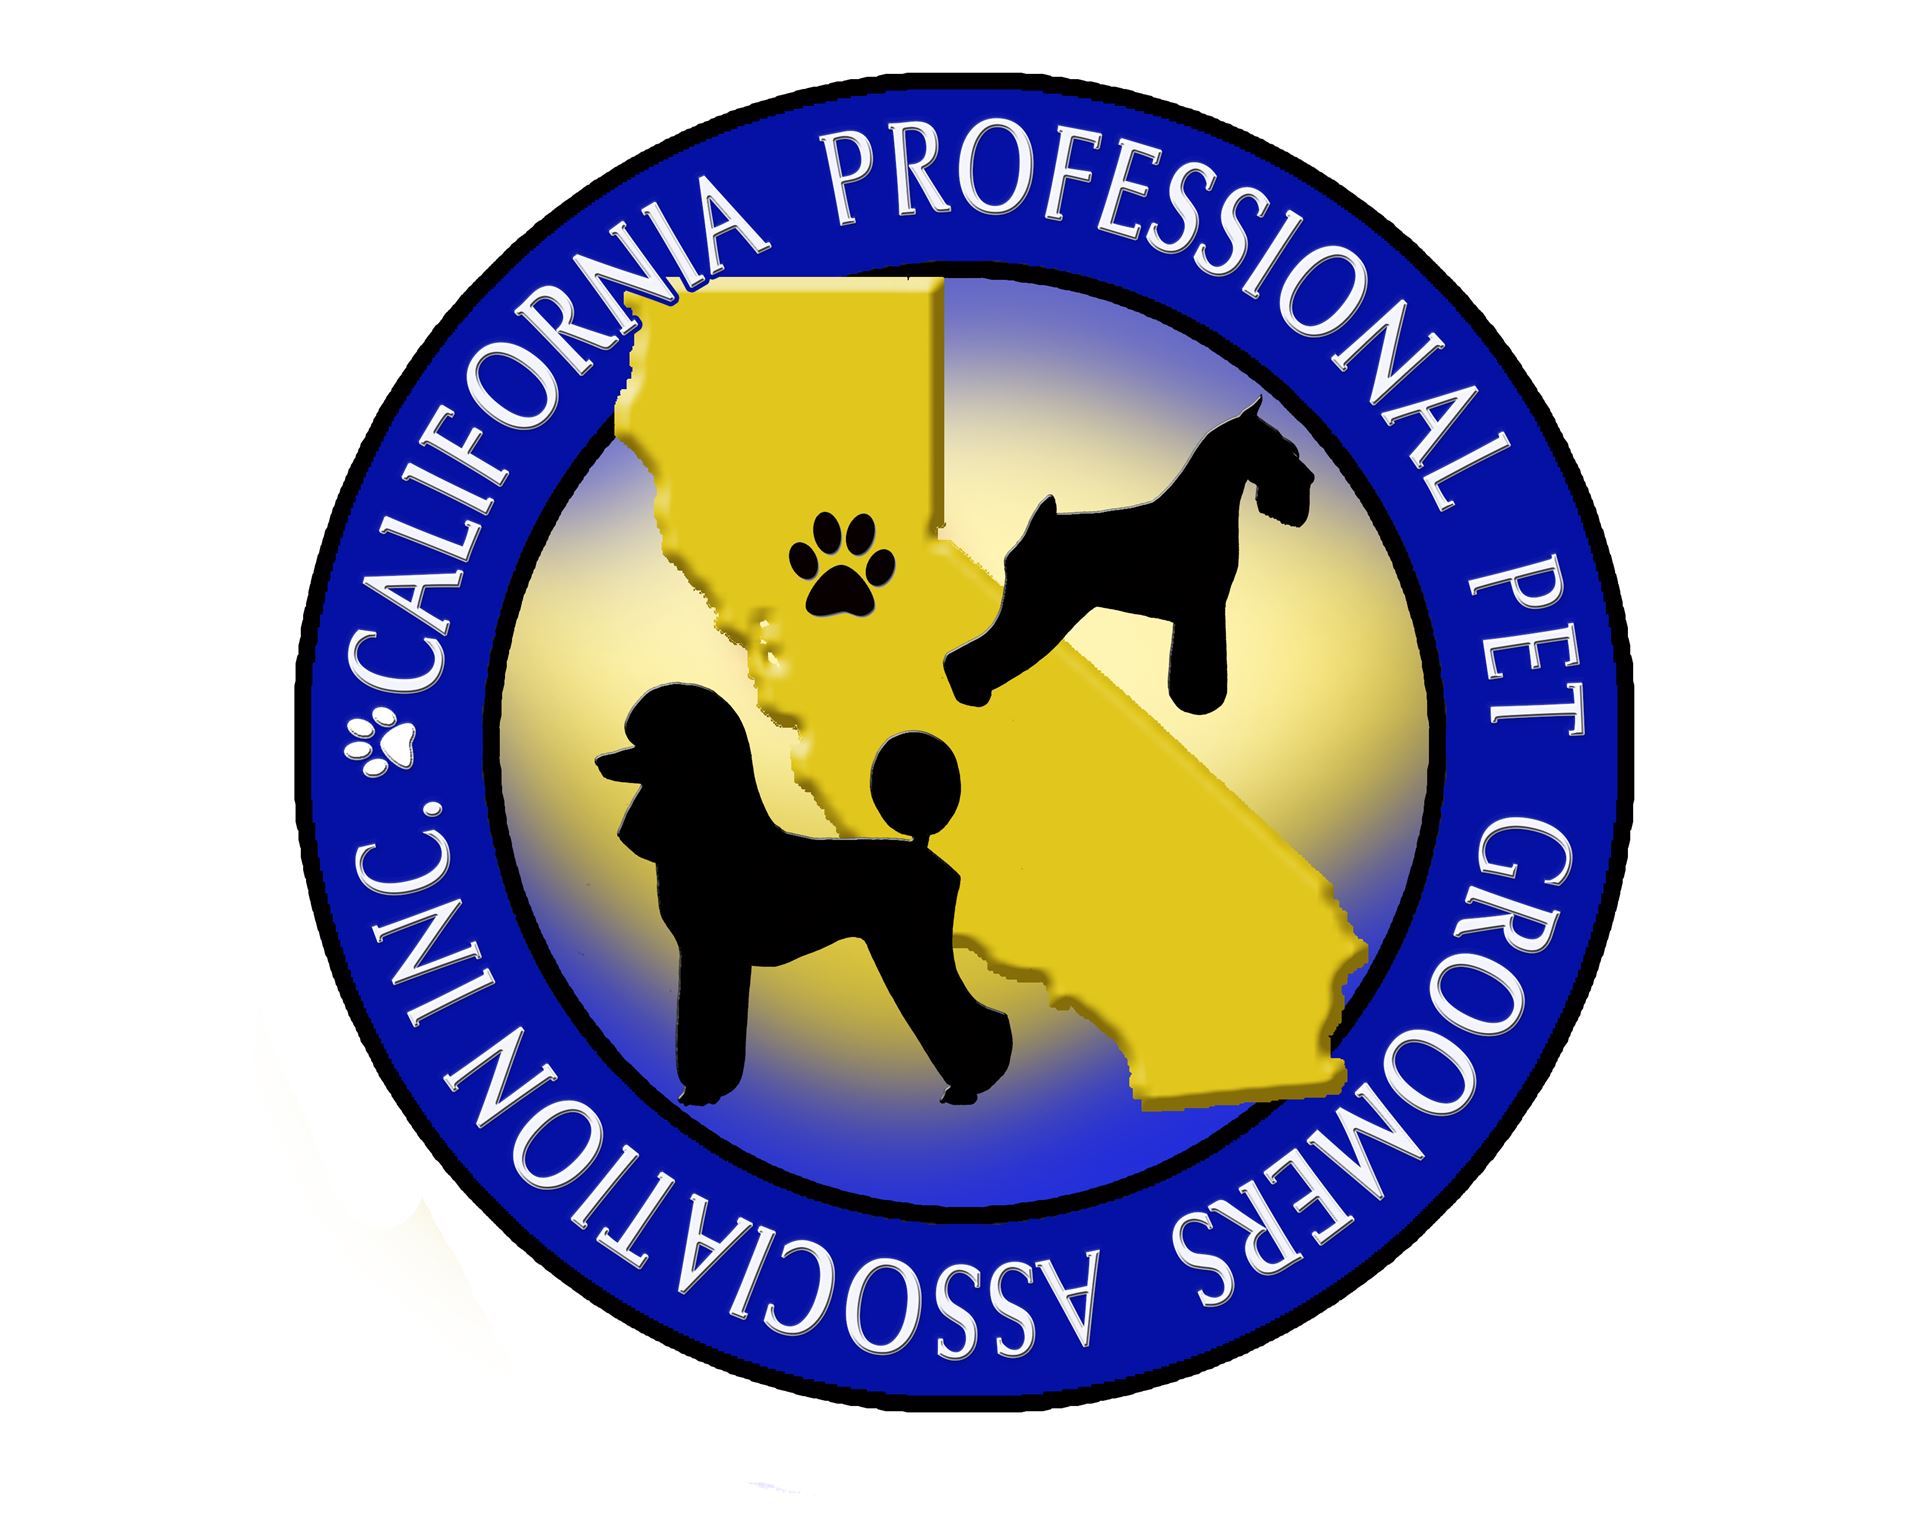 California Professional Pet Groomers Association Cppga